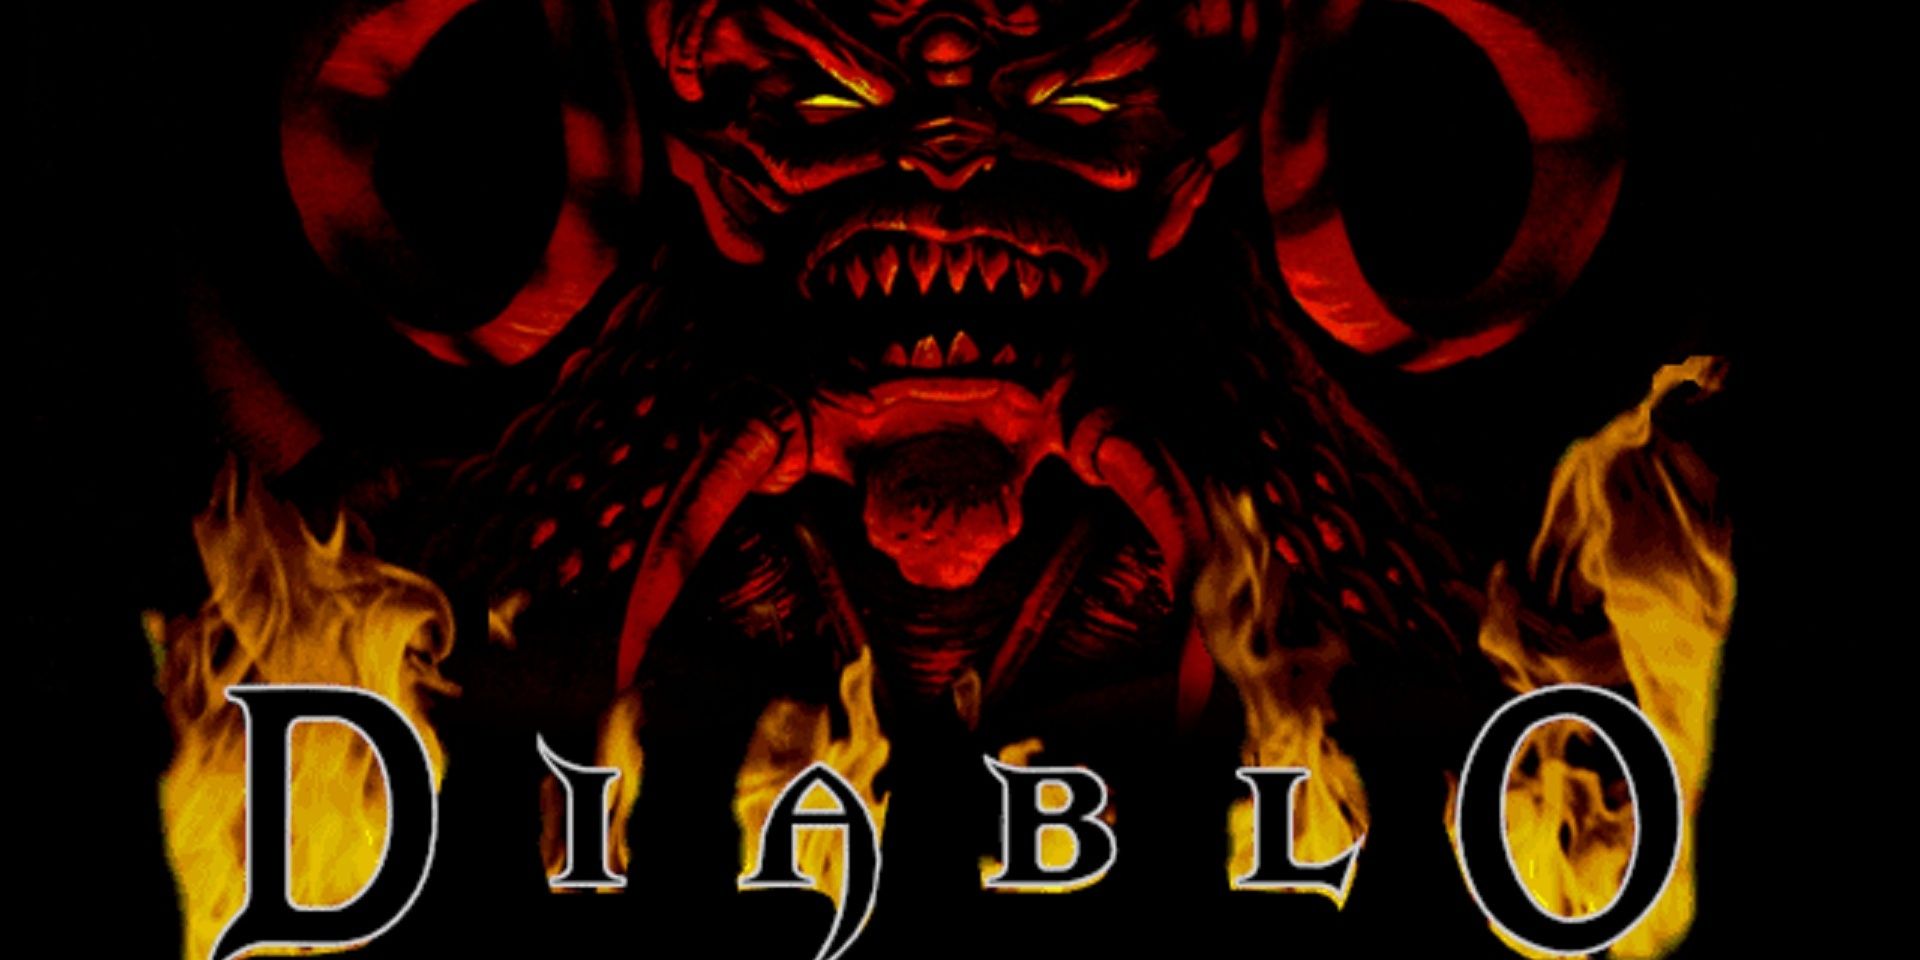 poster for the game Diablo featuring the main villain AlDiabolos the Lord of Terror a.k.a Diablo